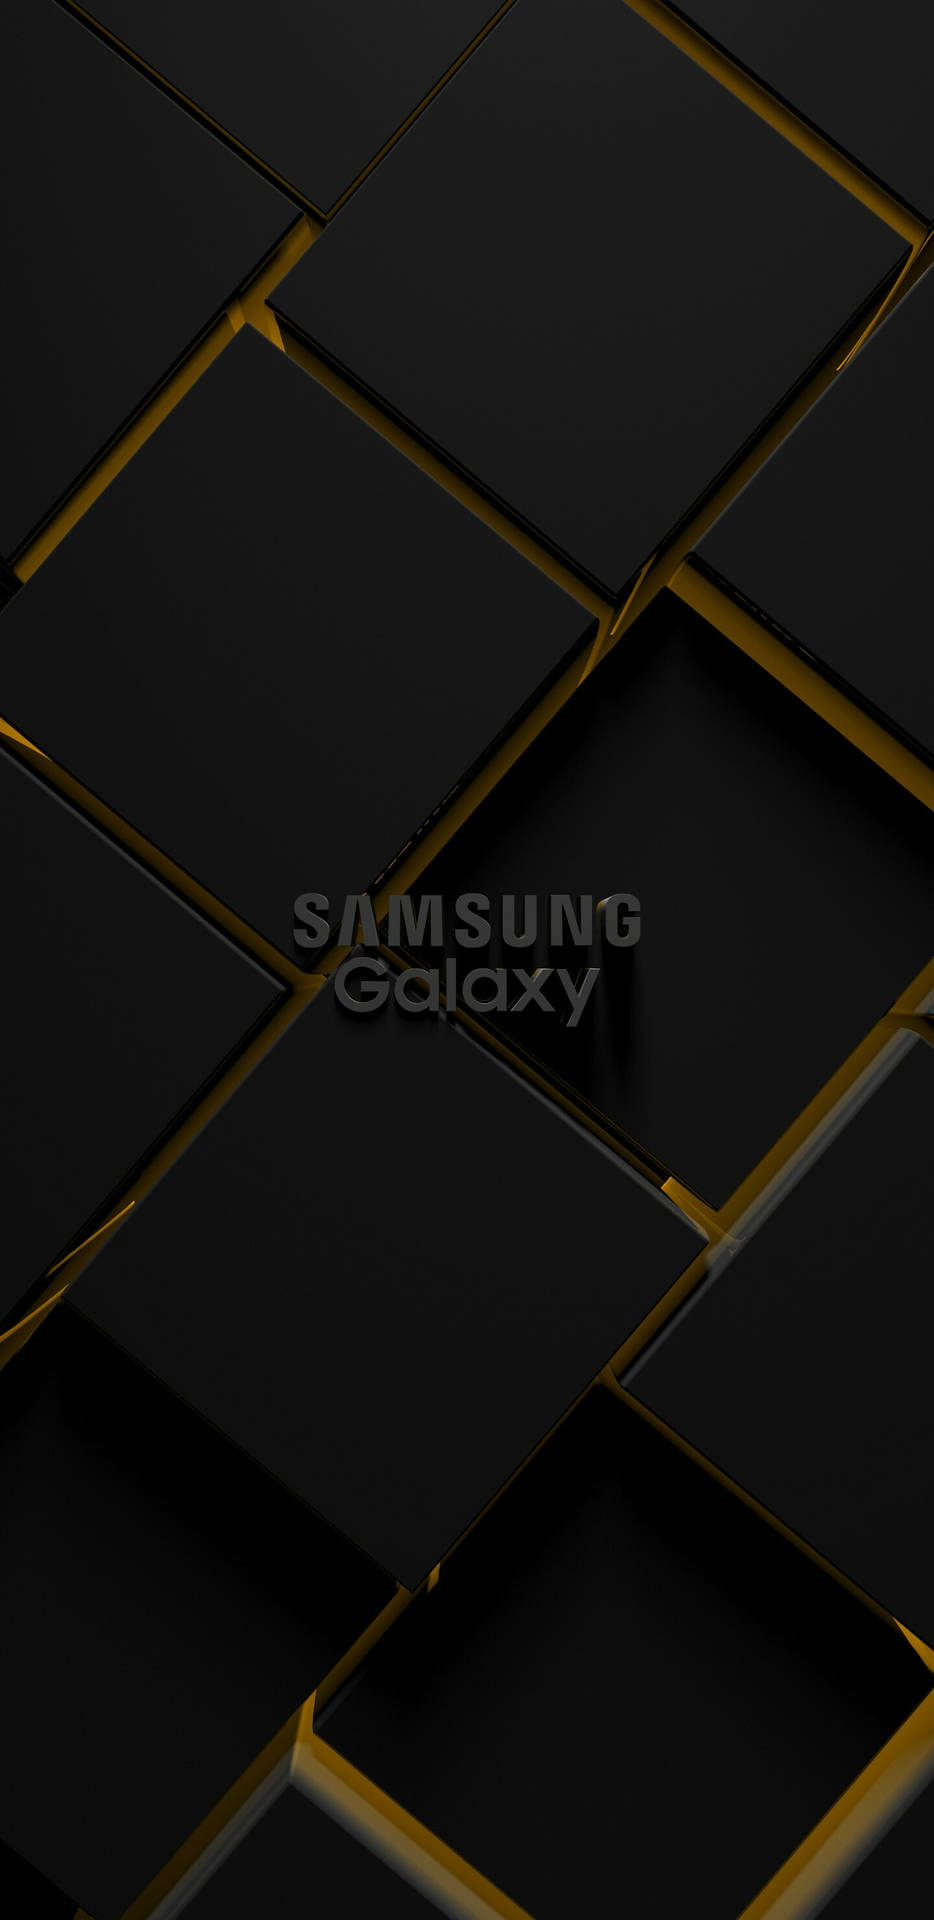 Samsung Galaxy Rhombus Yellow Light Wallpaper